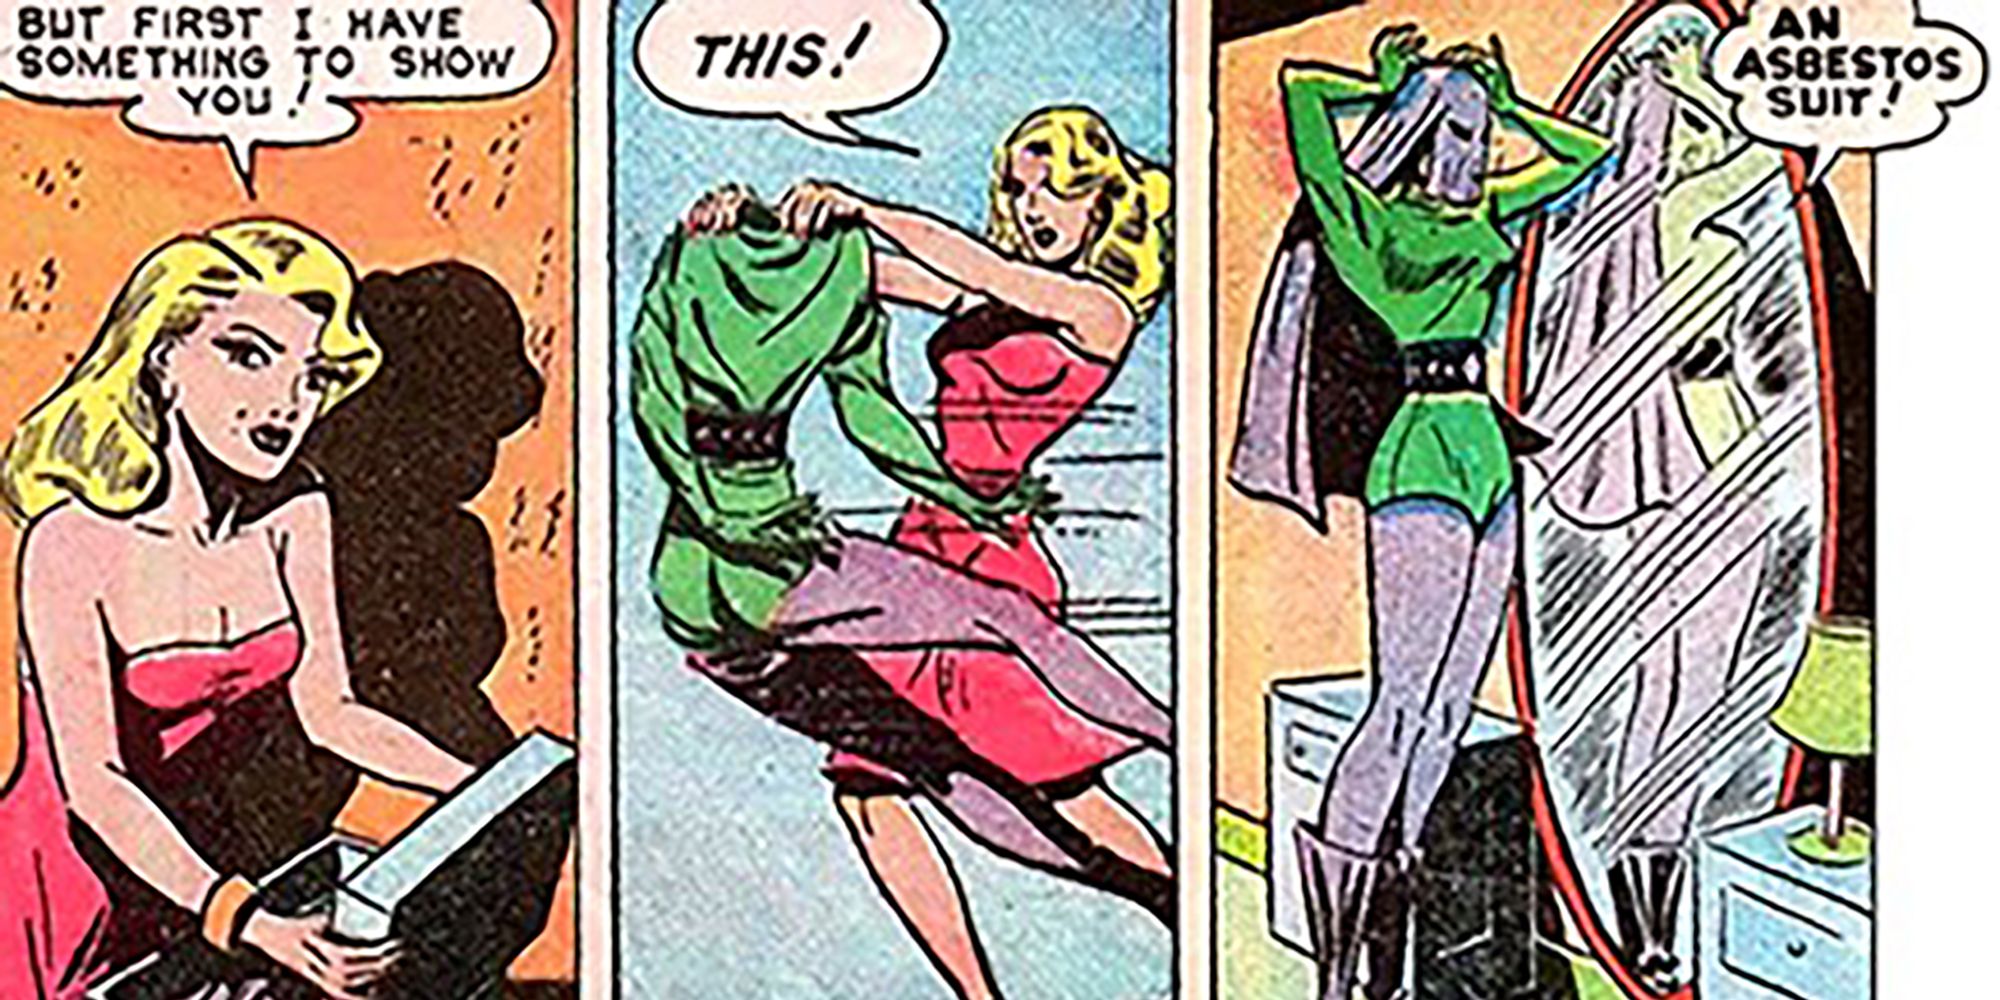 Asbestos Lady in Marvel Comics